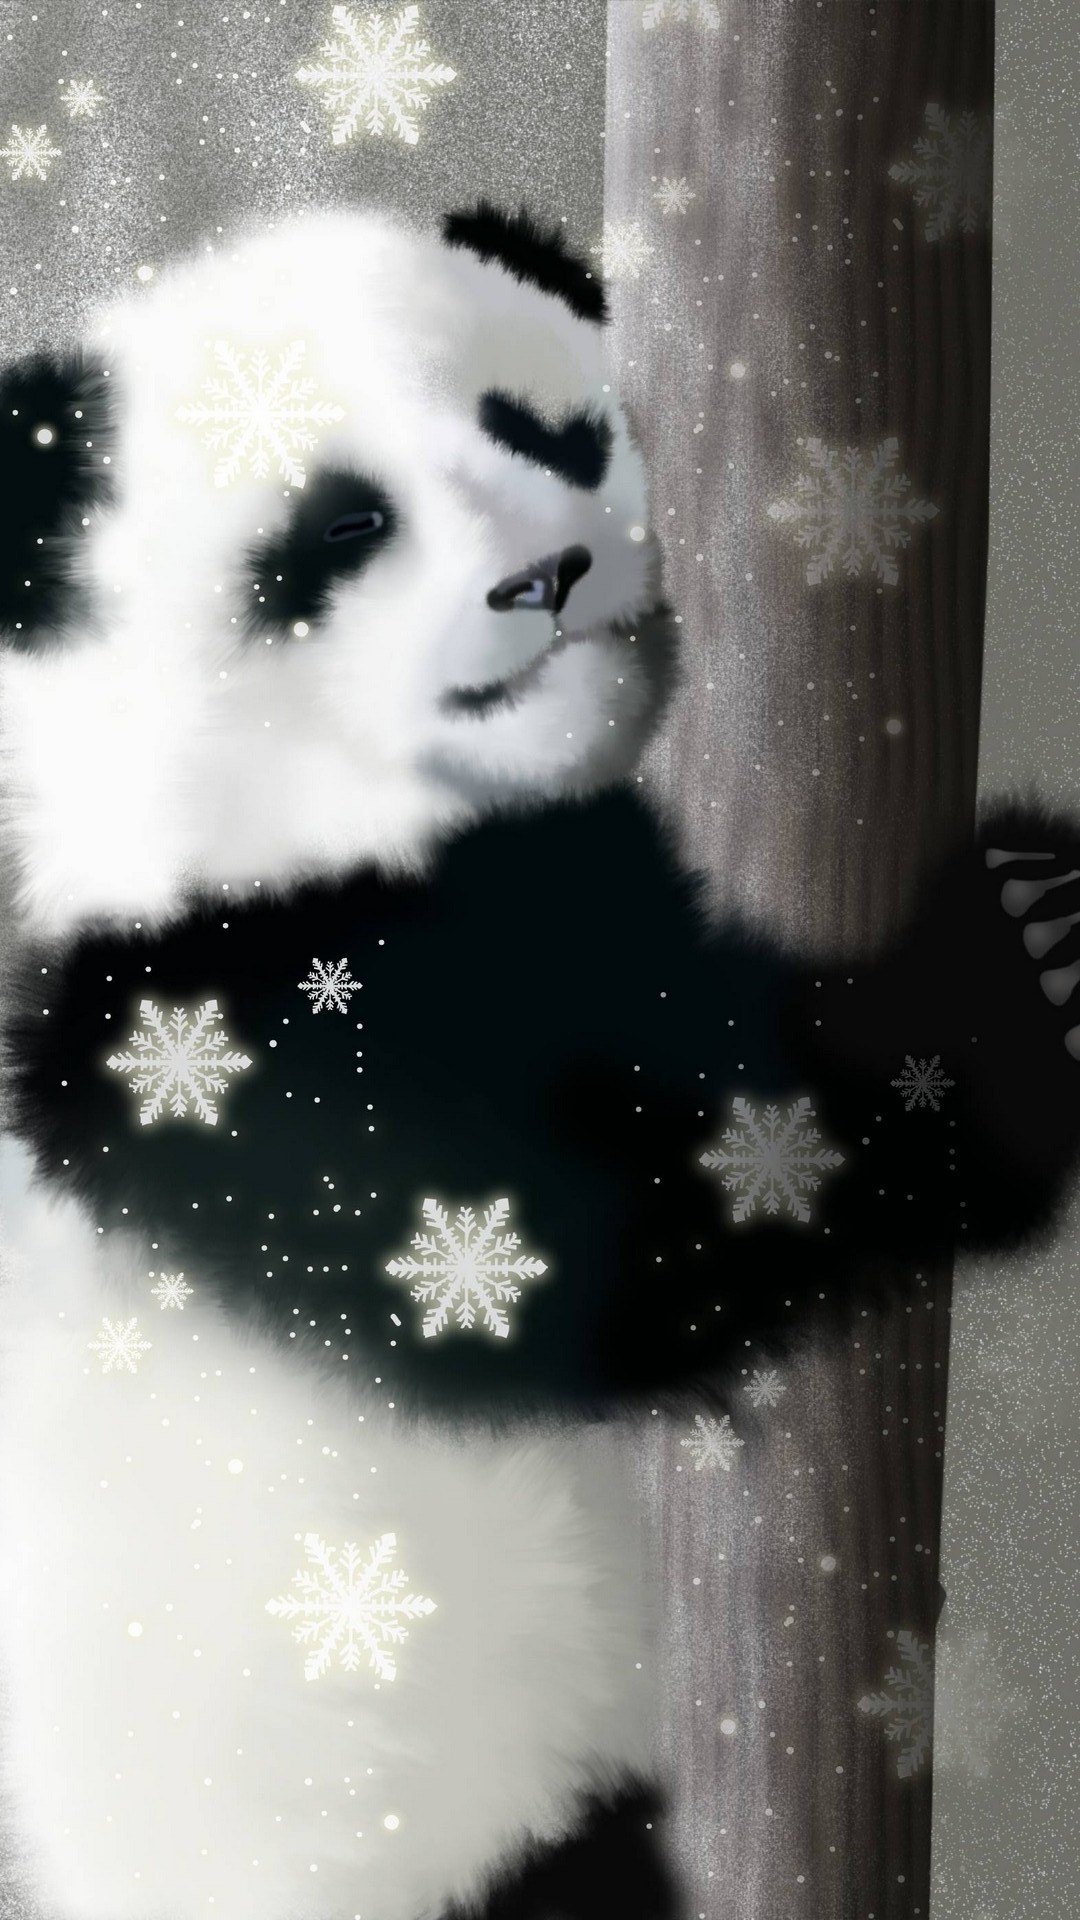 Cute Panda Wallpaper Android High Resolution 1080X1920